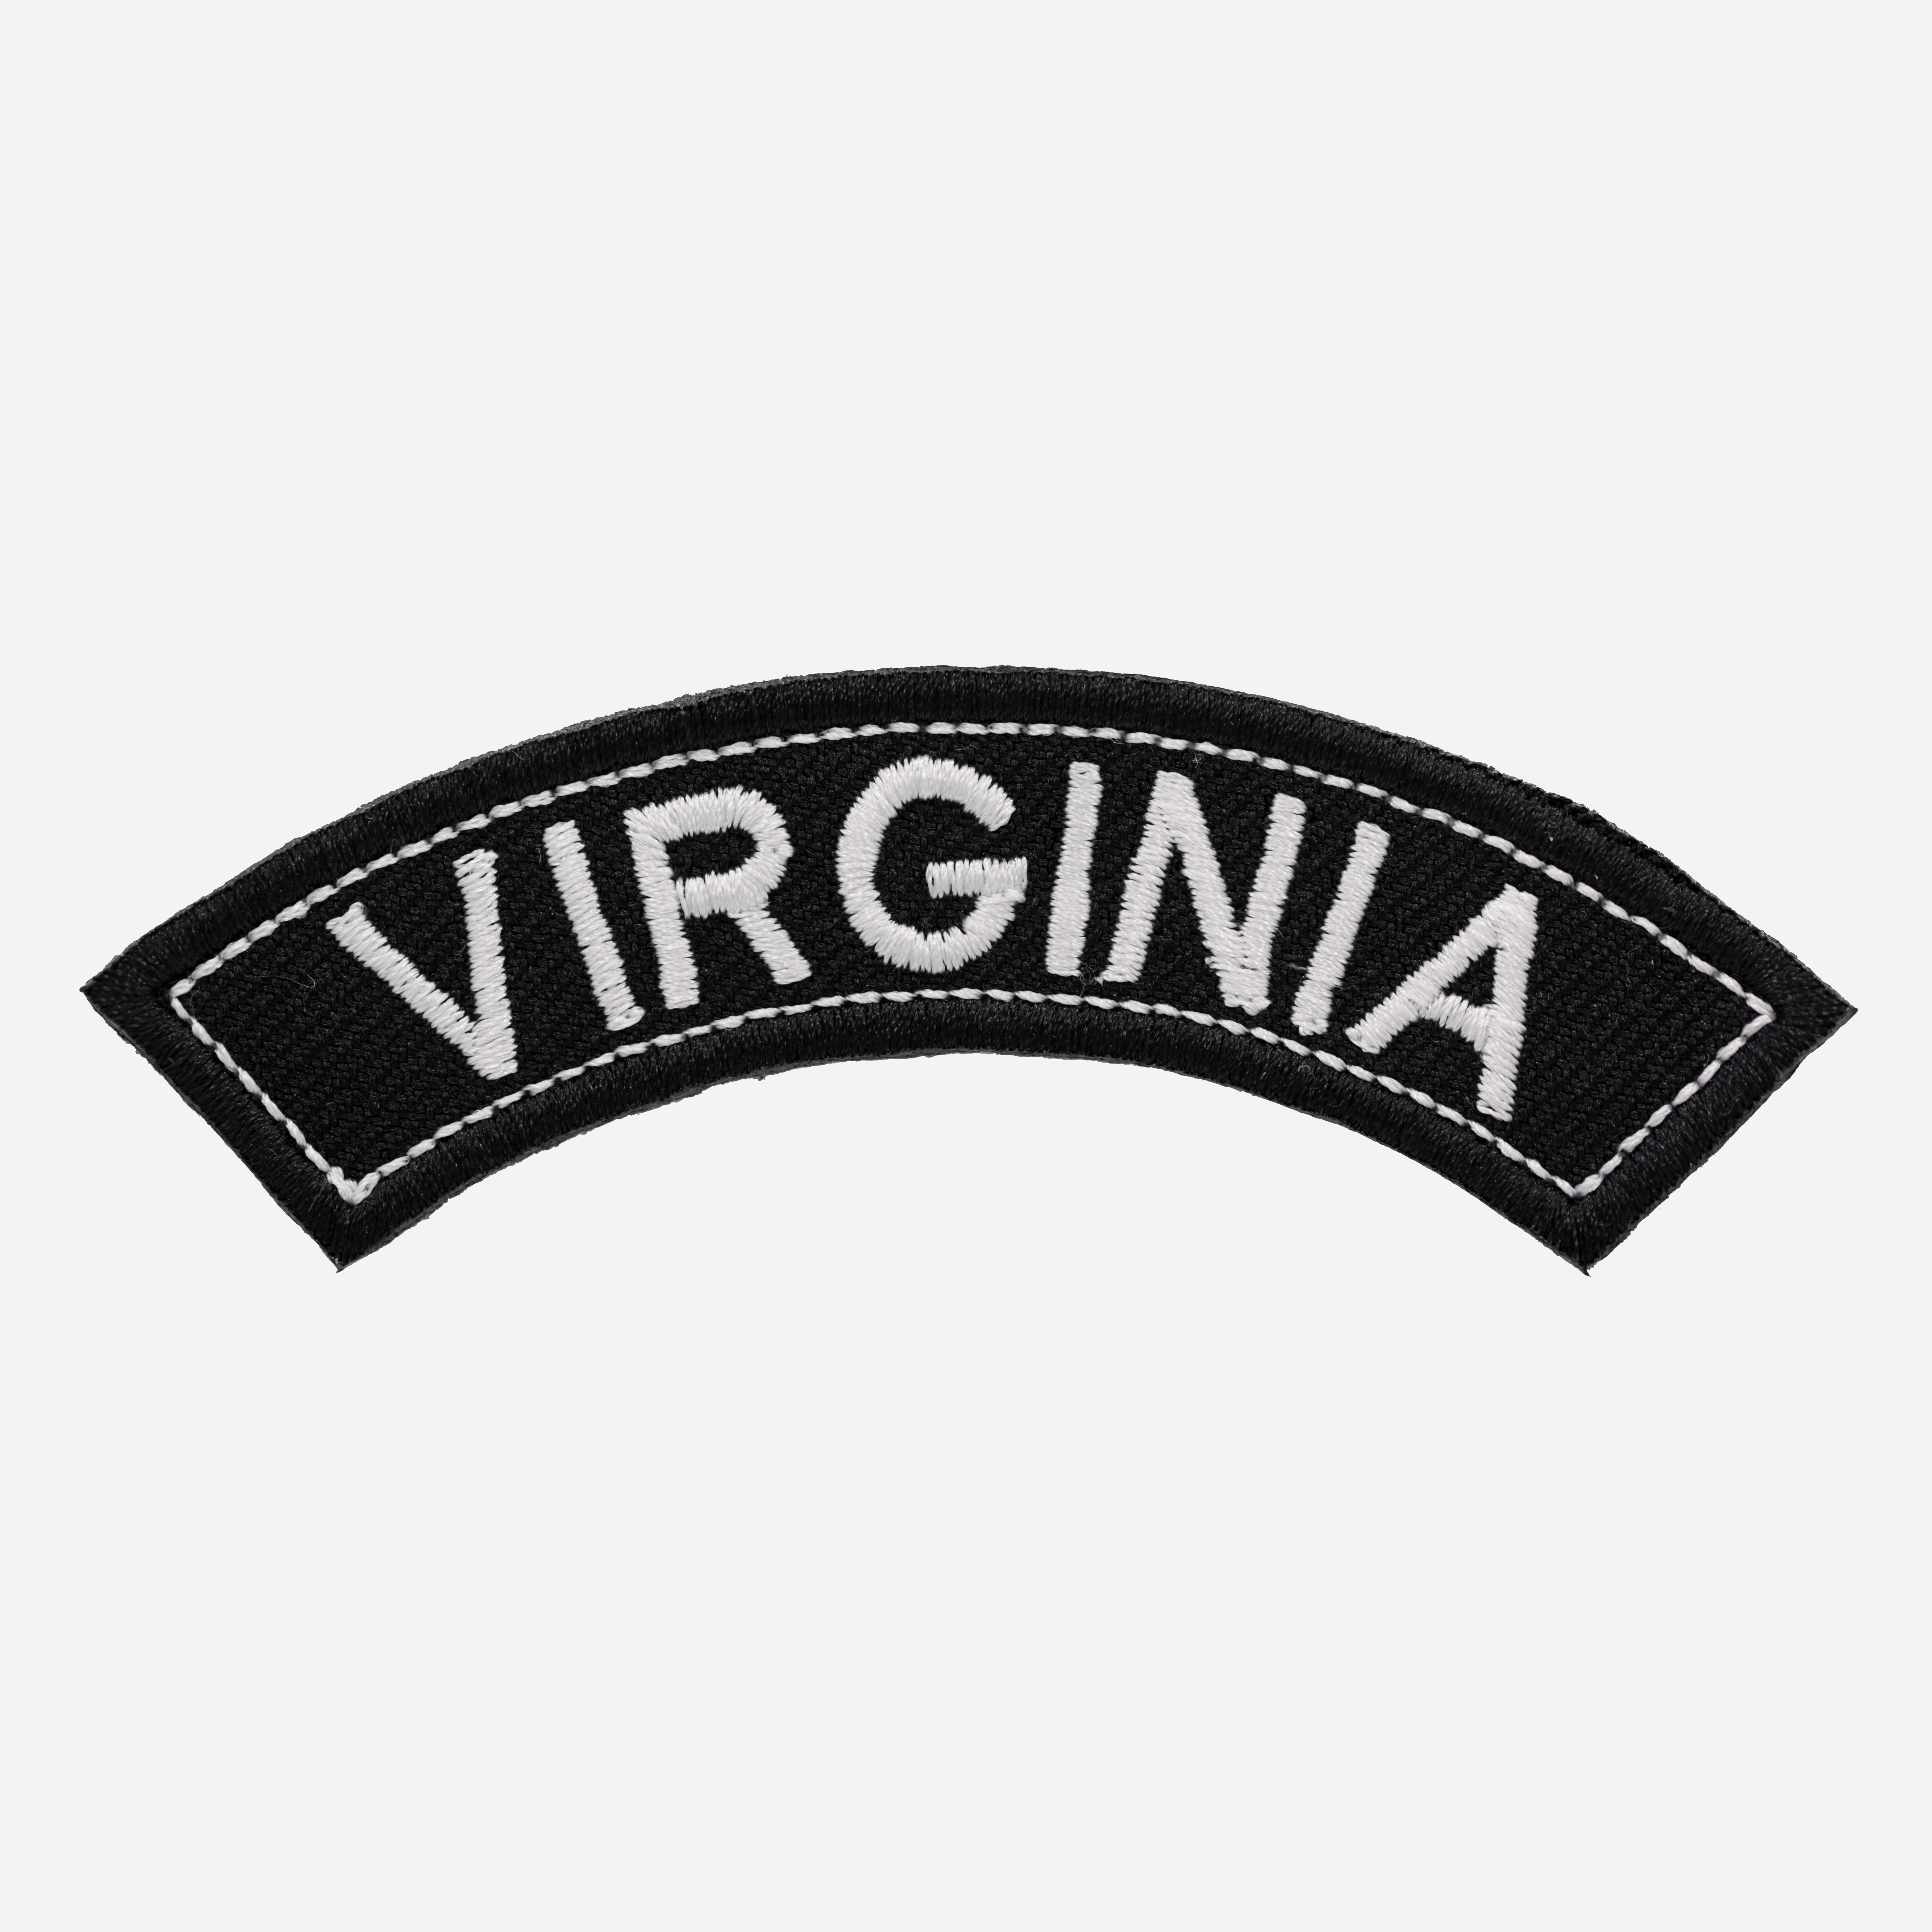 Virginia Mini Top Rocker Embroidered Vest Patch